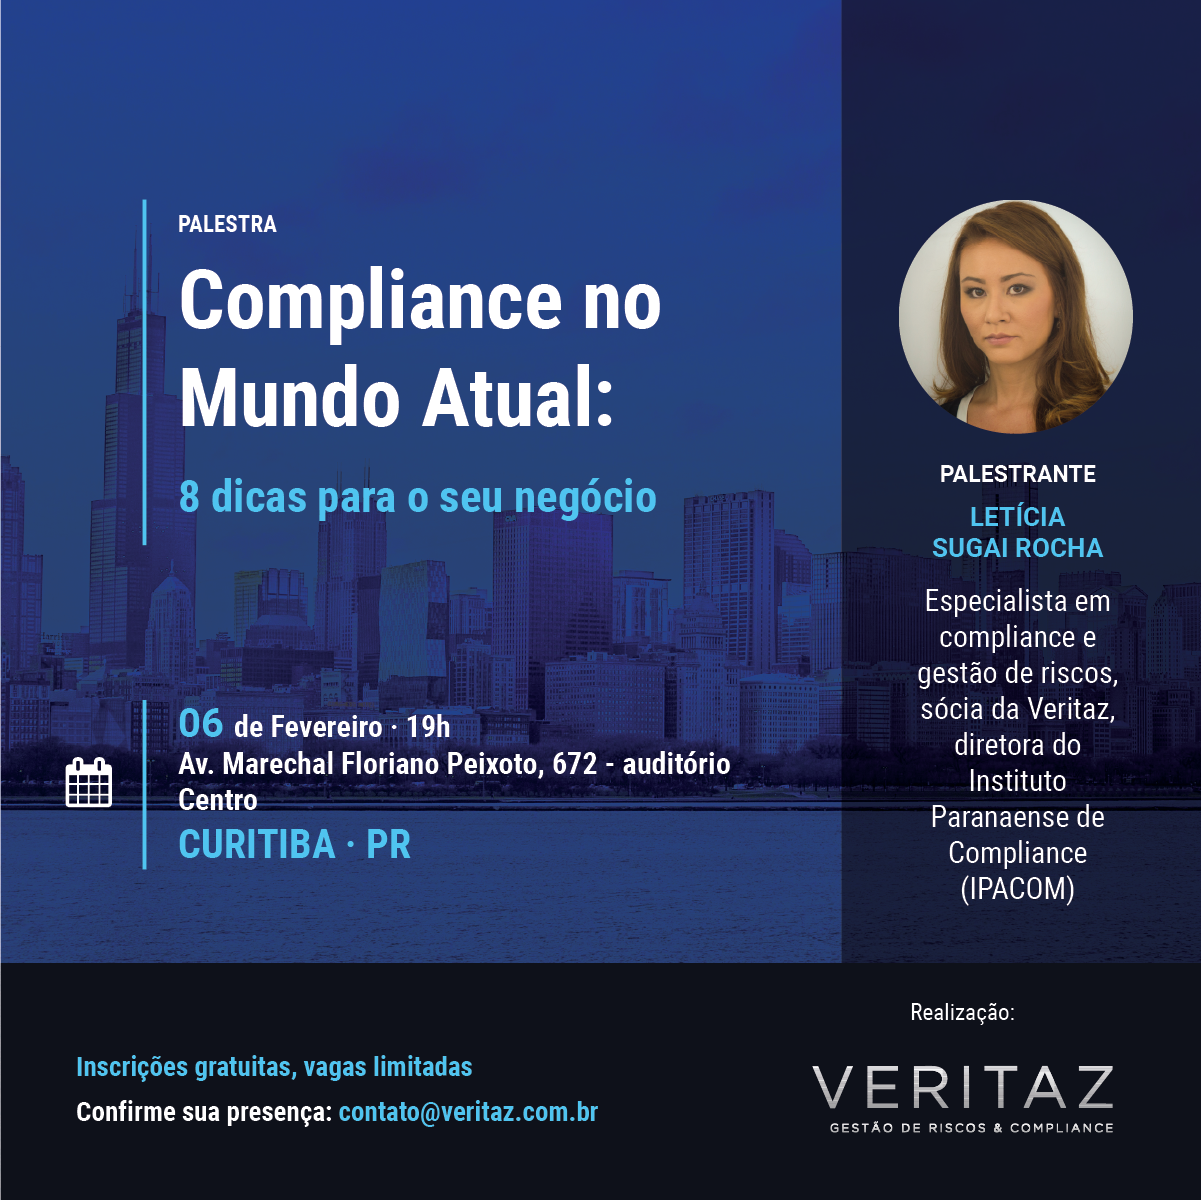 Convite para palestra de compliance da Letícia Sugai e Veritaz